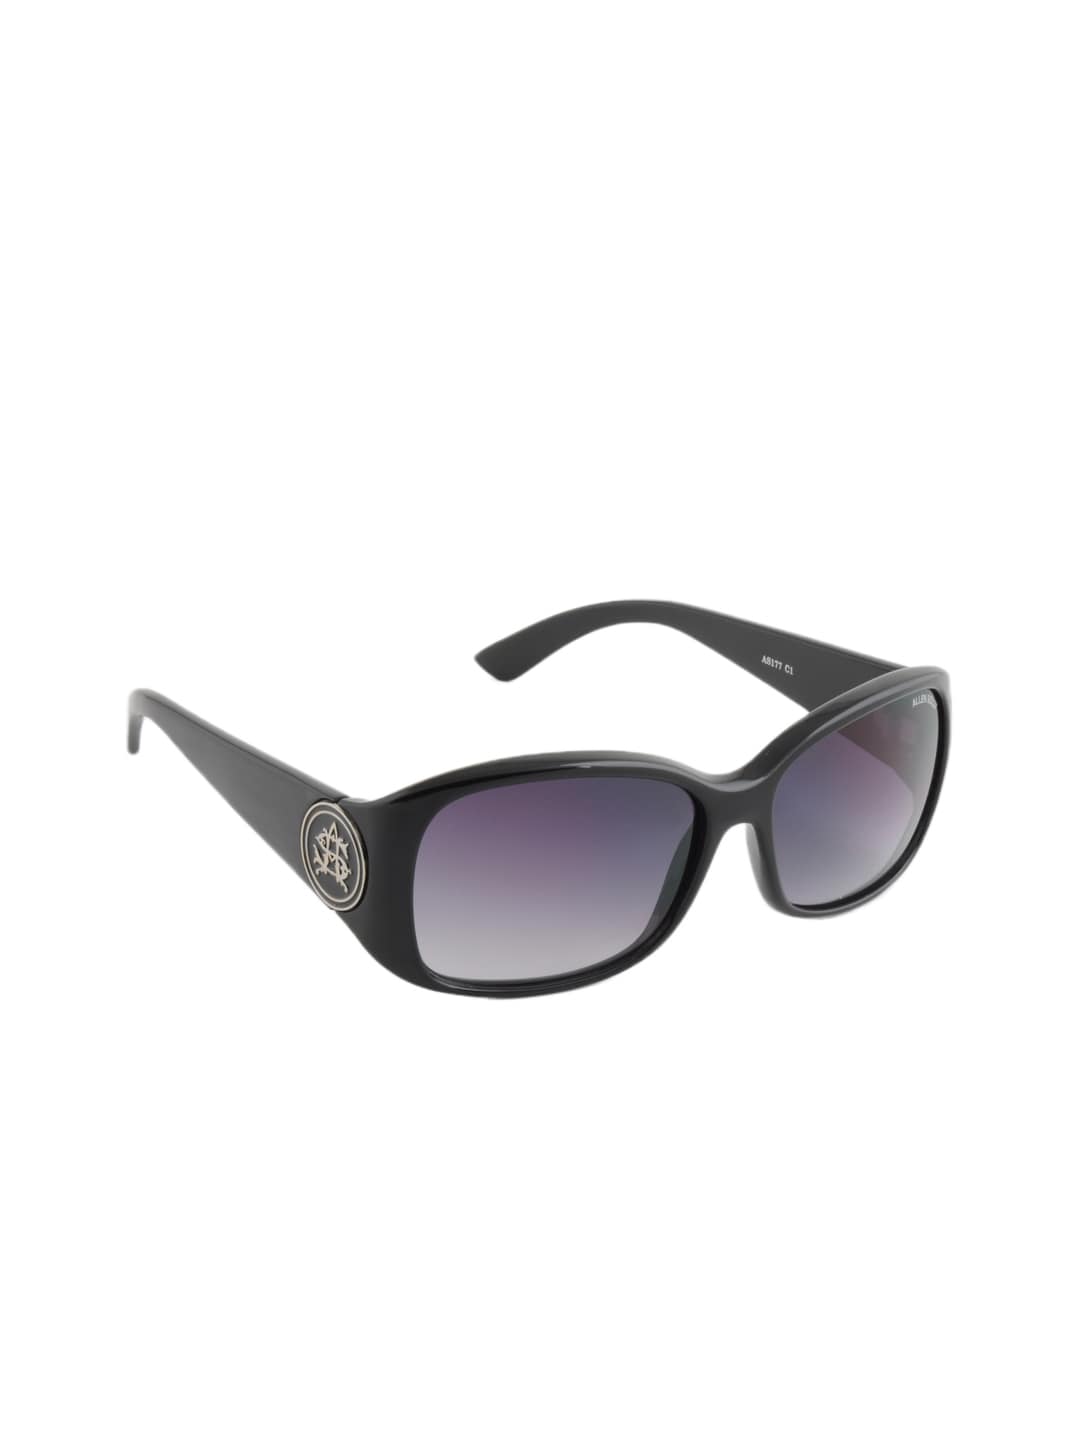 Allen Solly Women Sunglasses AS177-C1